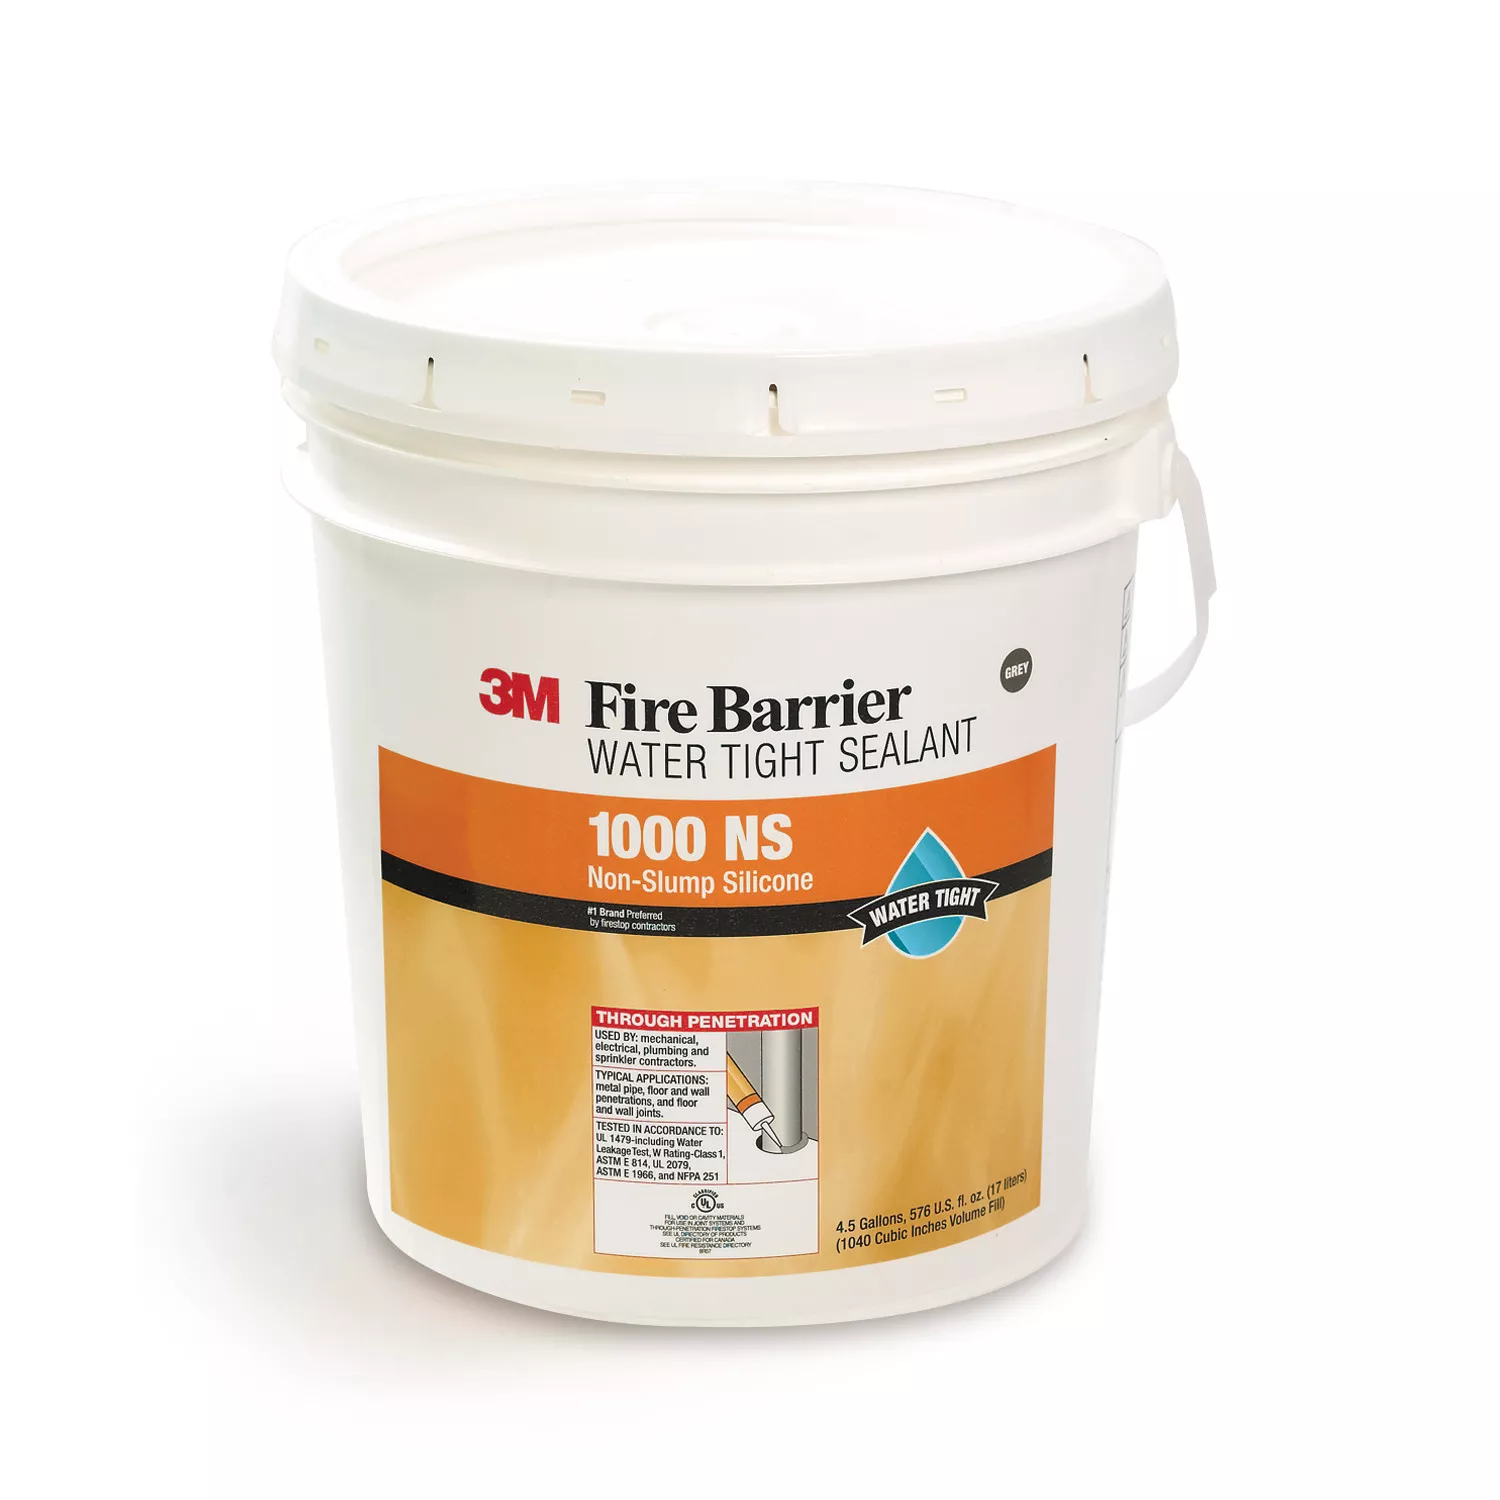 3M™ Fire Barrier Water Tight Sealant 1000 NS, Gray, 4.5 Gallon (Pail), 1
Each/Drum